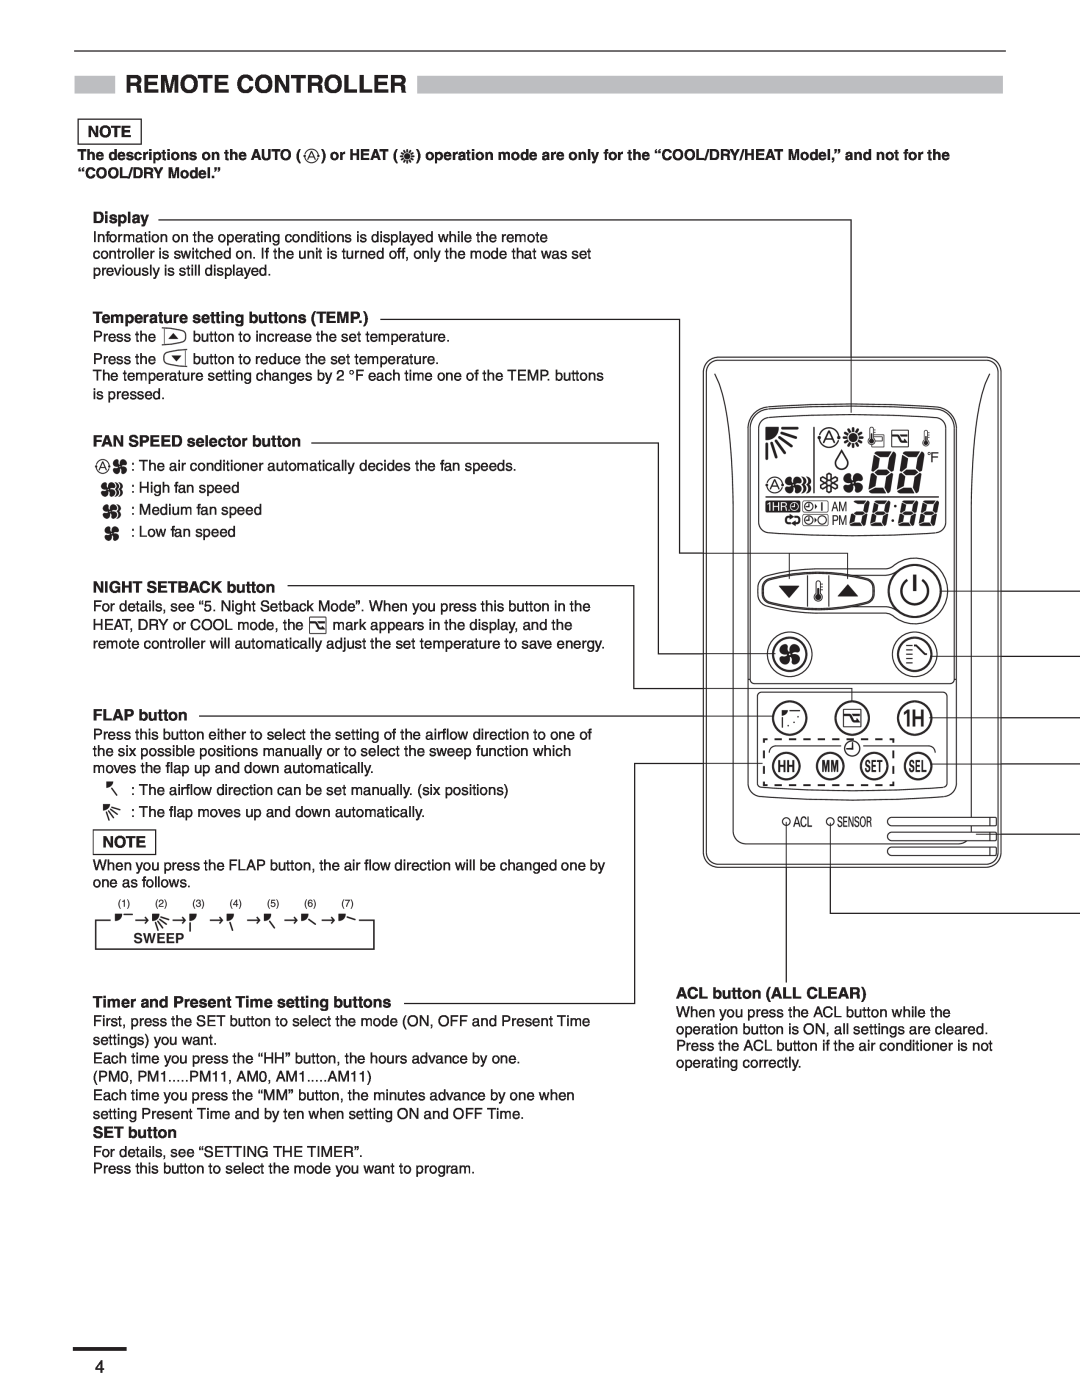 Panasonic CS-KS12NB41 & CZ-18BT1U Remote Controller, Display, Temperature setting buttons TEMP, FAN SPEED selector button 